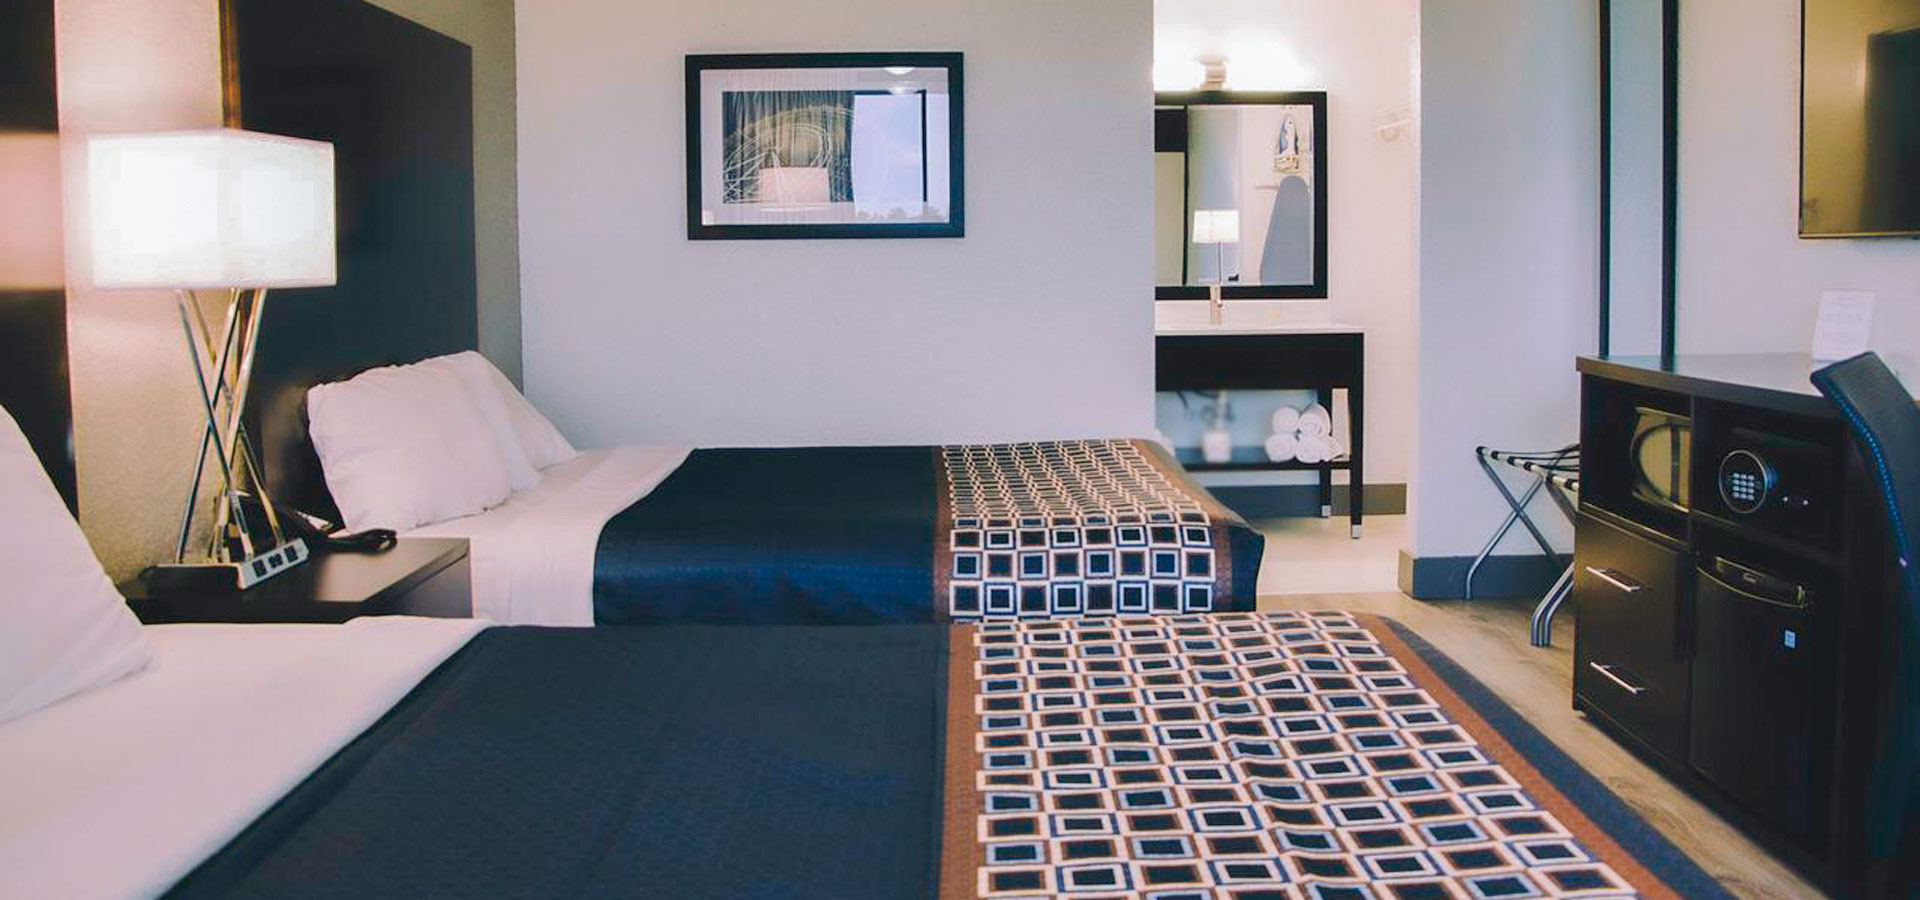 Hotel Monreale Express I-Drive - Single Bed Room